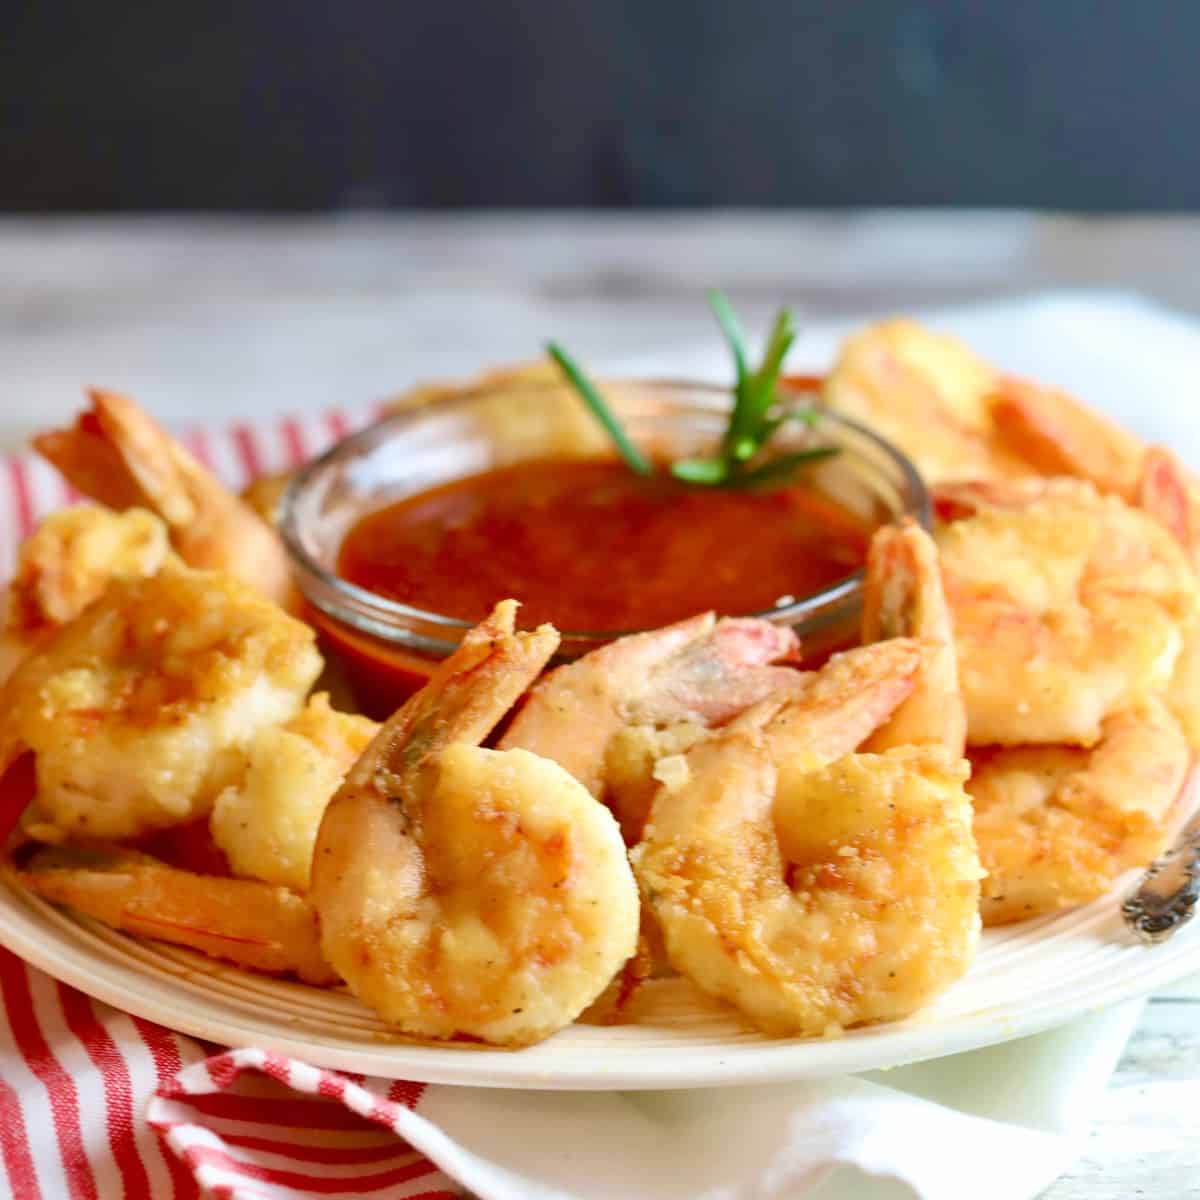 https://www.gritsandpinecones.com/wp-content/uploads/2022/10/pan-fried-shrimp-final-cocktail-sauce-featured-1200x1200-copy.jpg